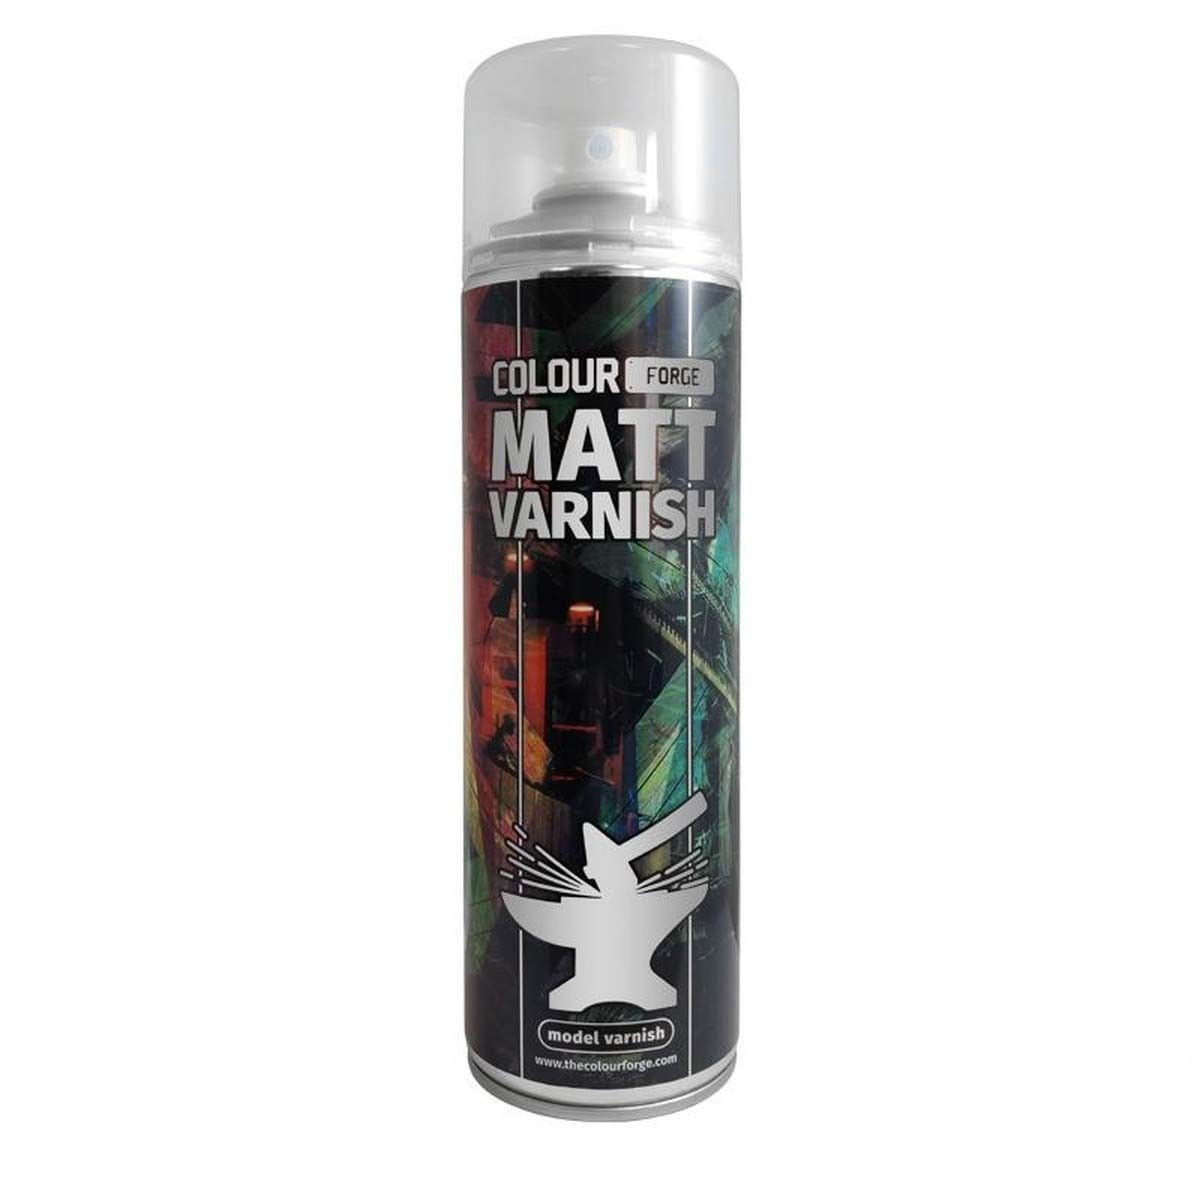 Colour Forge Matt Varnish Spray